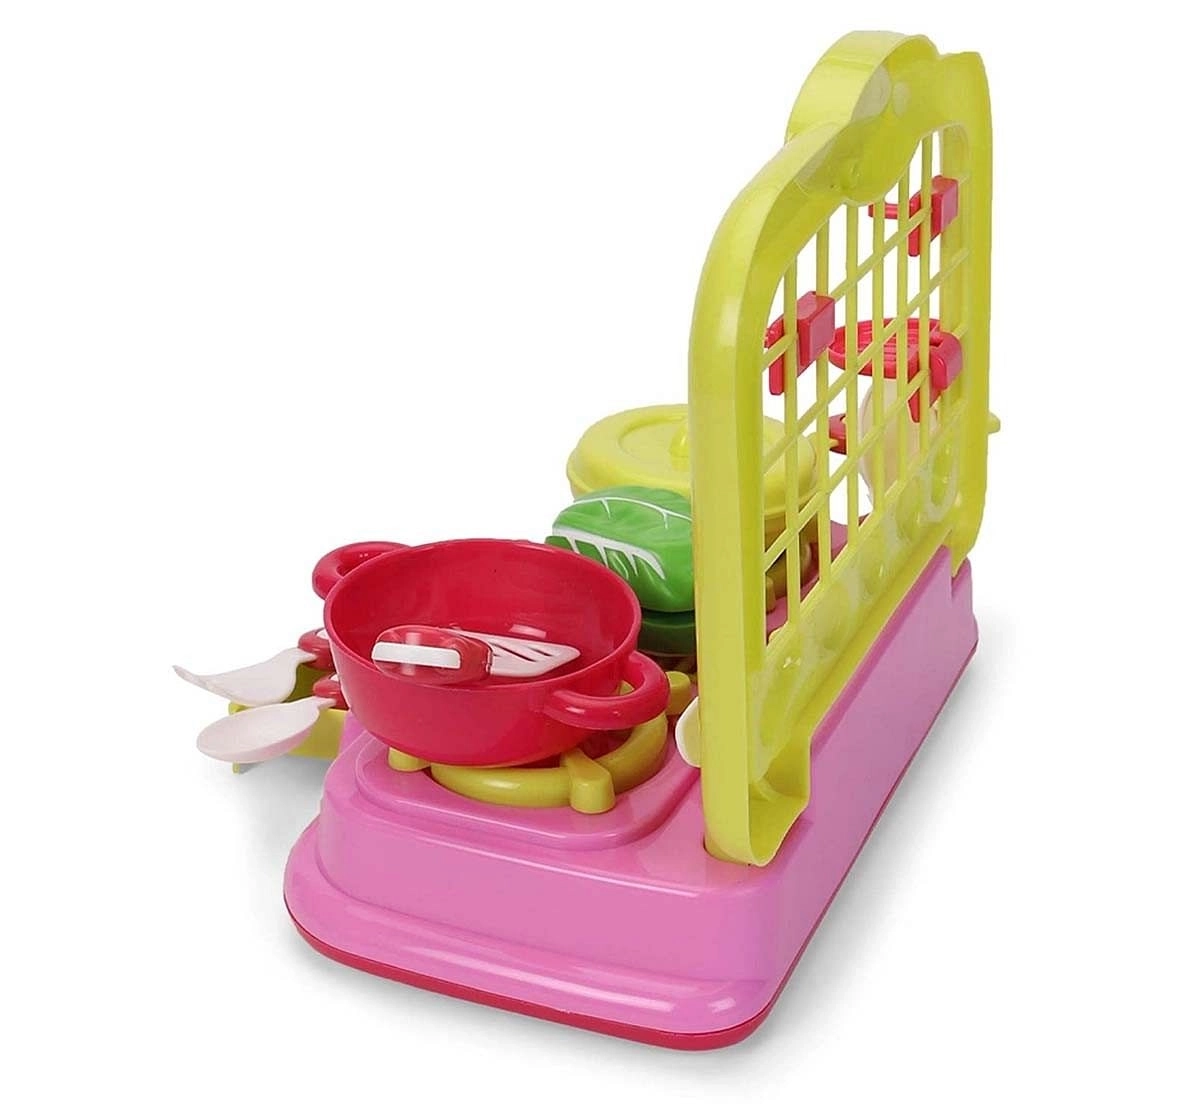 Barbie Kitchen Set Kitchen Sets & Appliances for Kids Age 3Y+